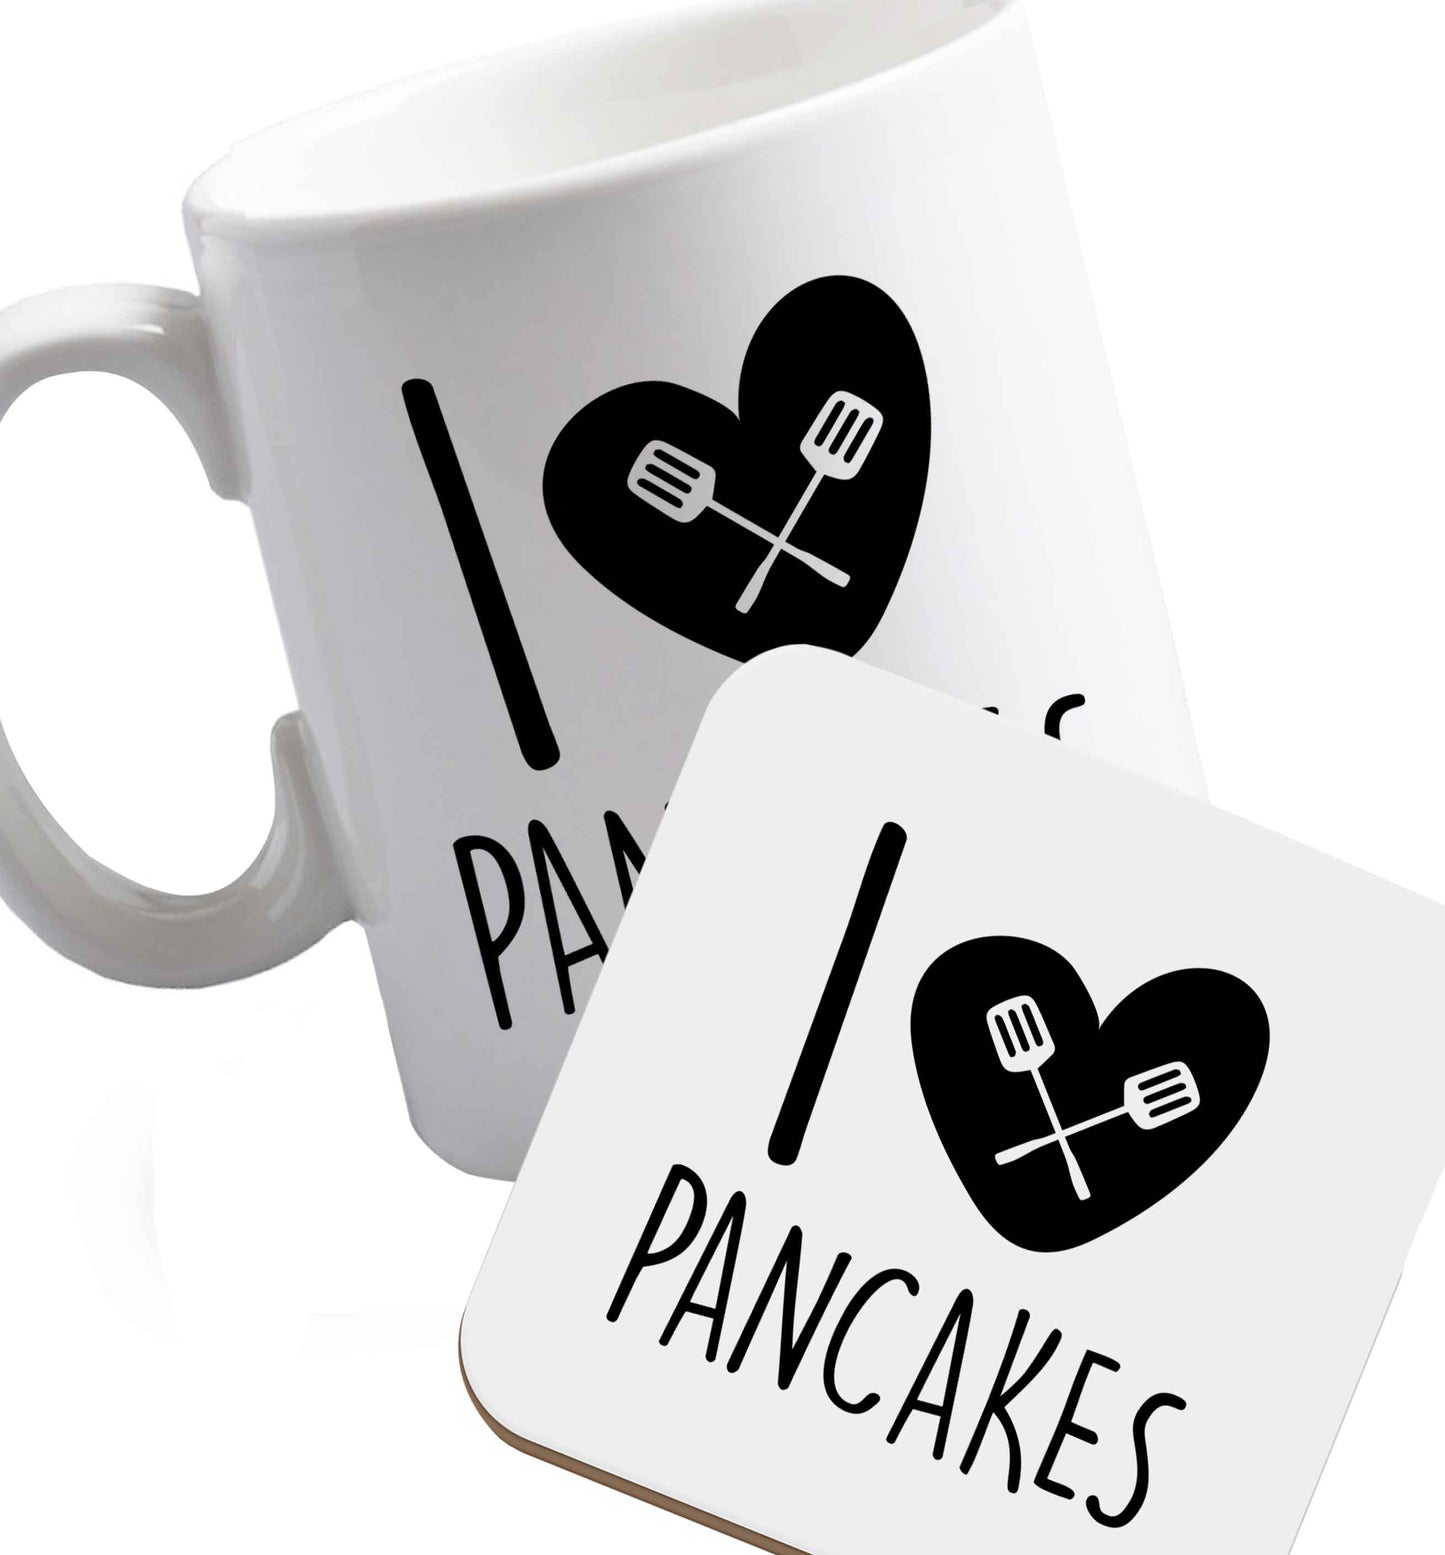 10 oz I Love Pancakes ceramic mug and coaster set right handed